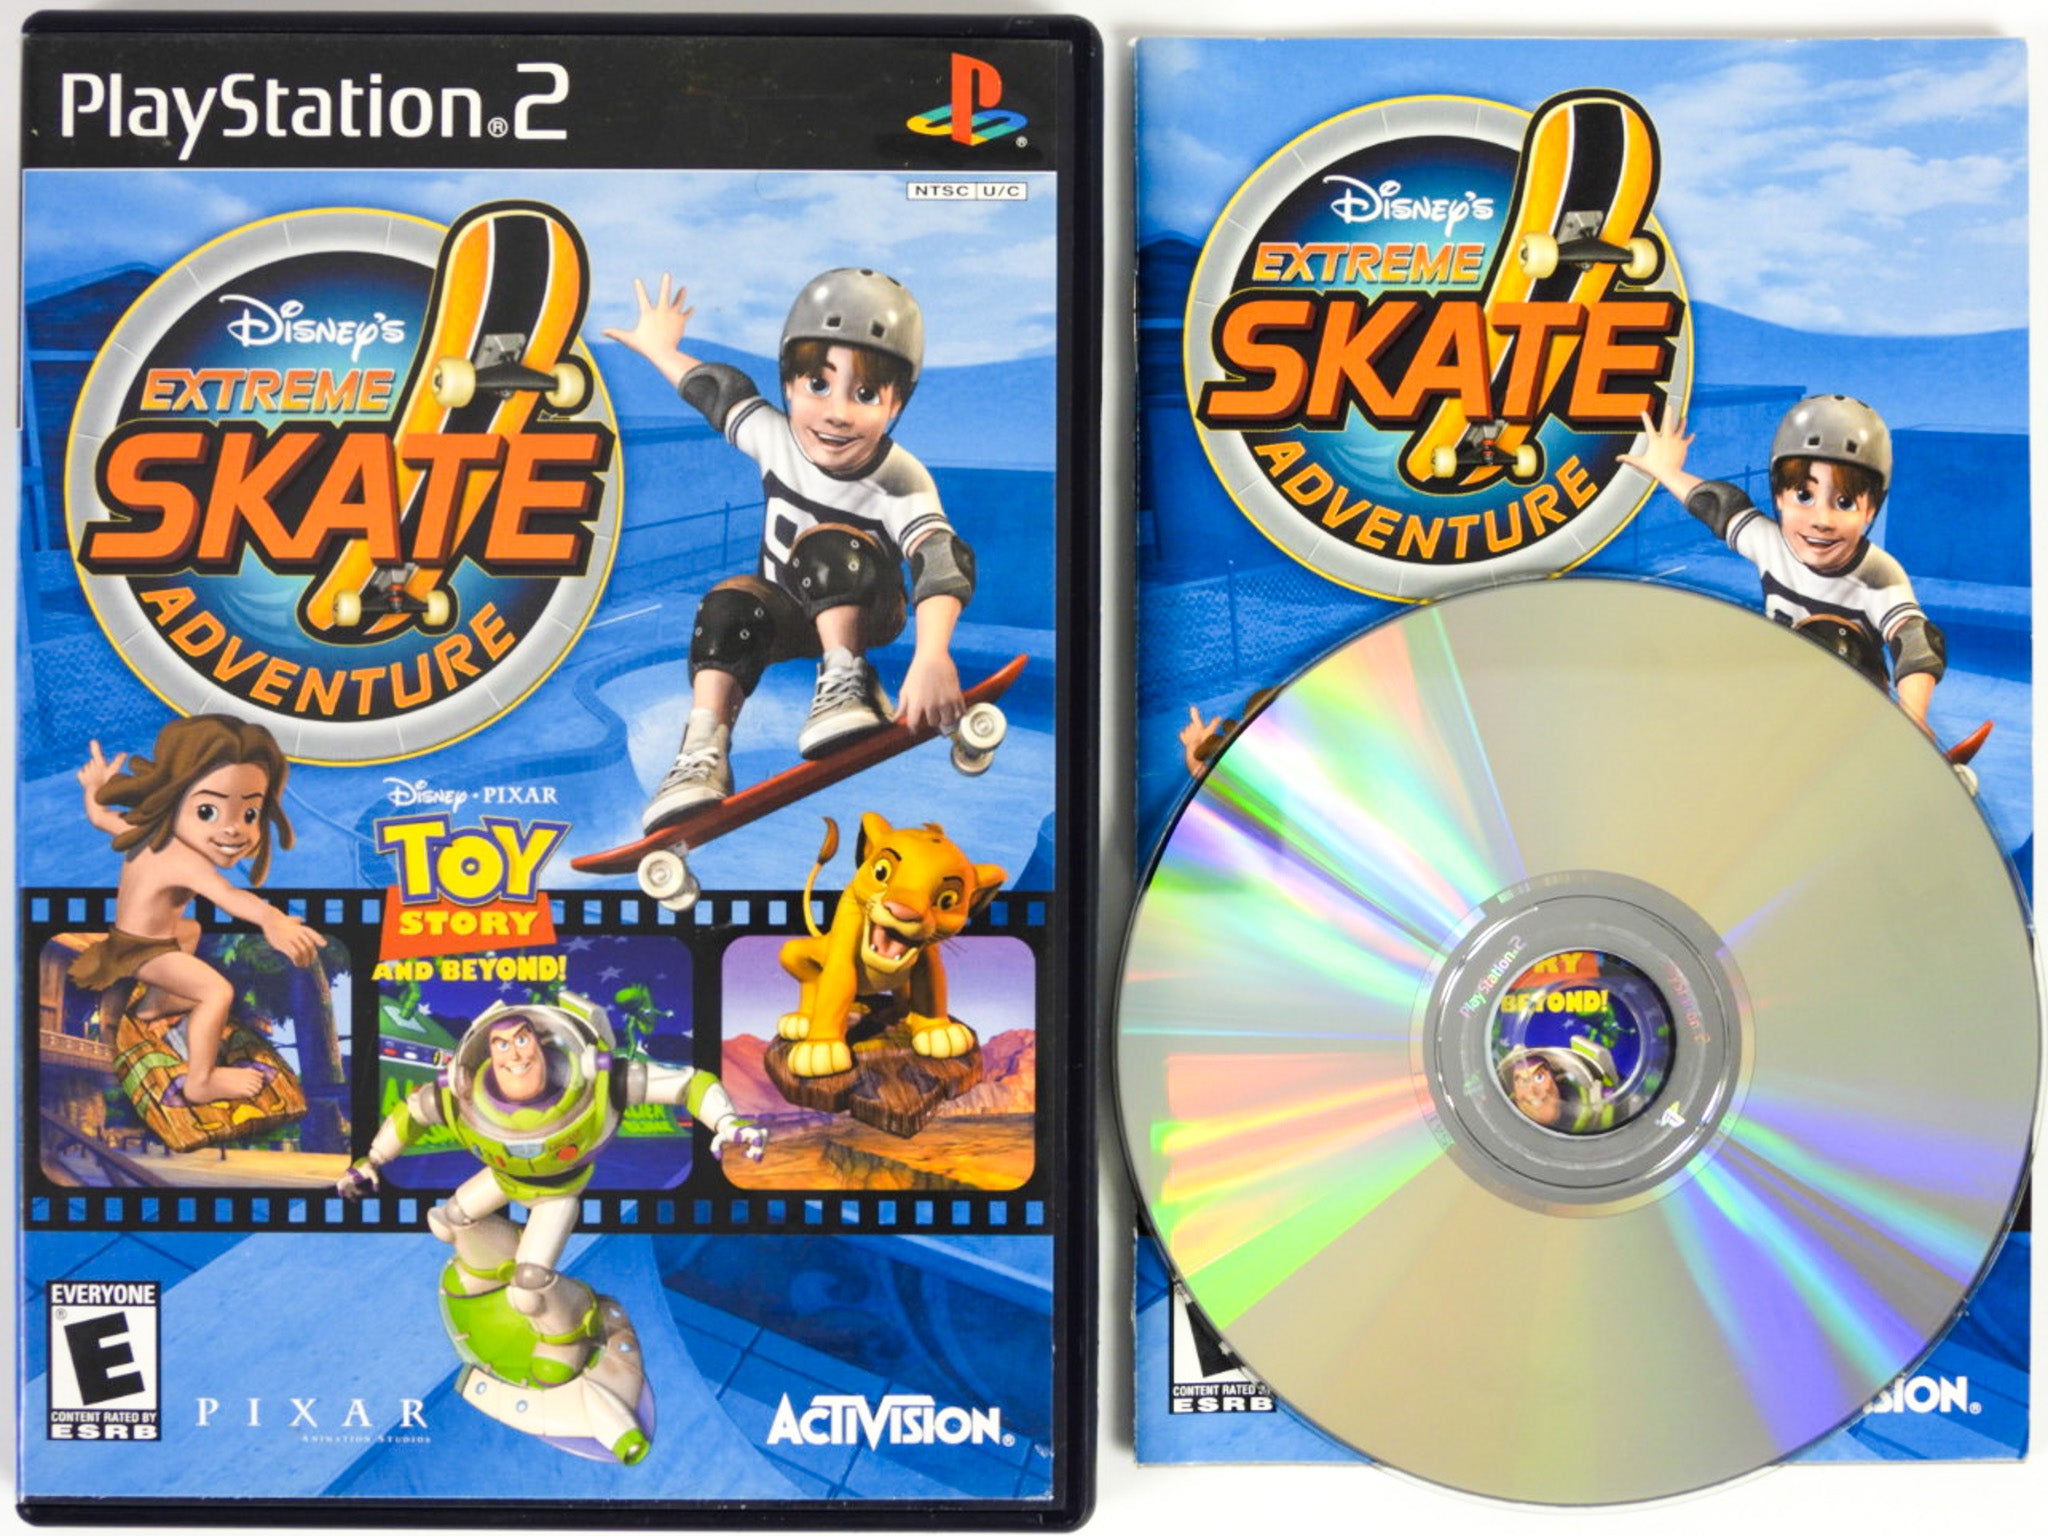 Disney's Extreme Skate Adventure ES PS2 (Seminovo) - Play n' Play